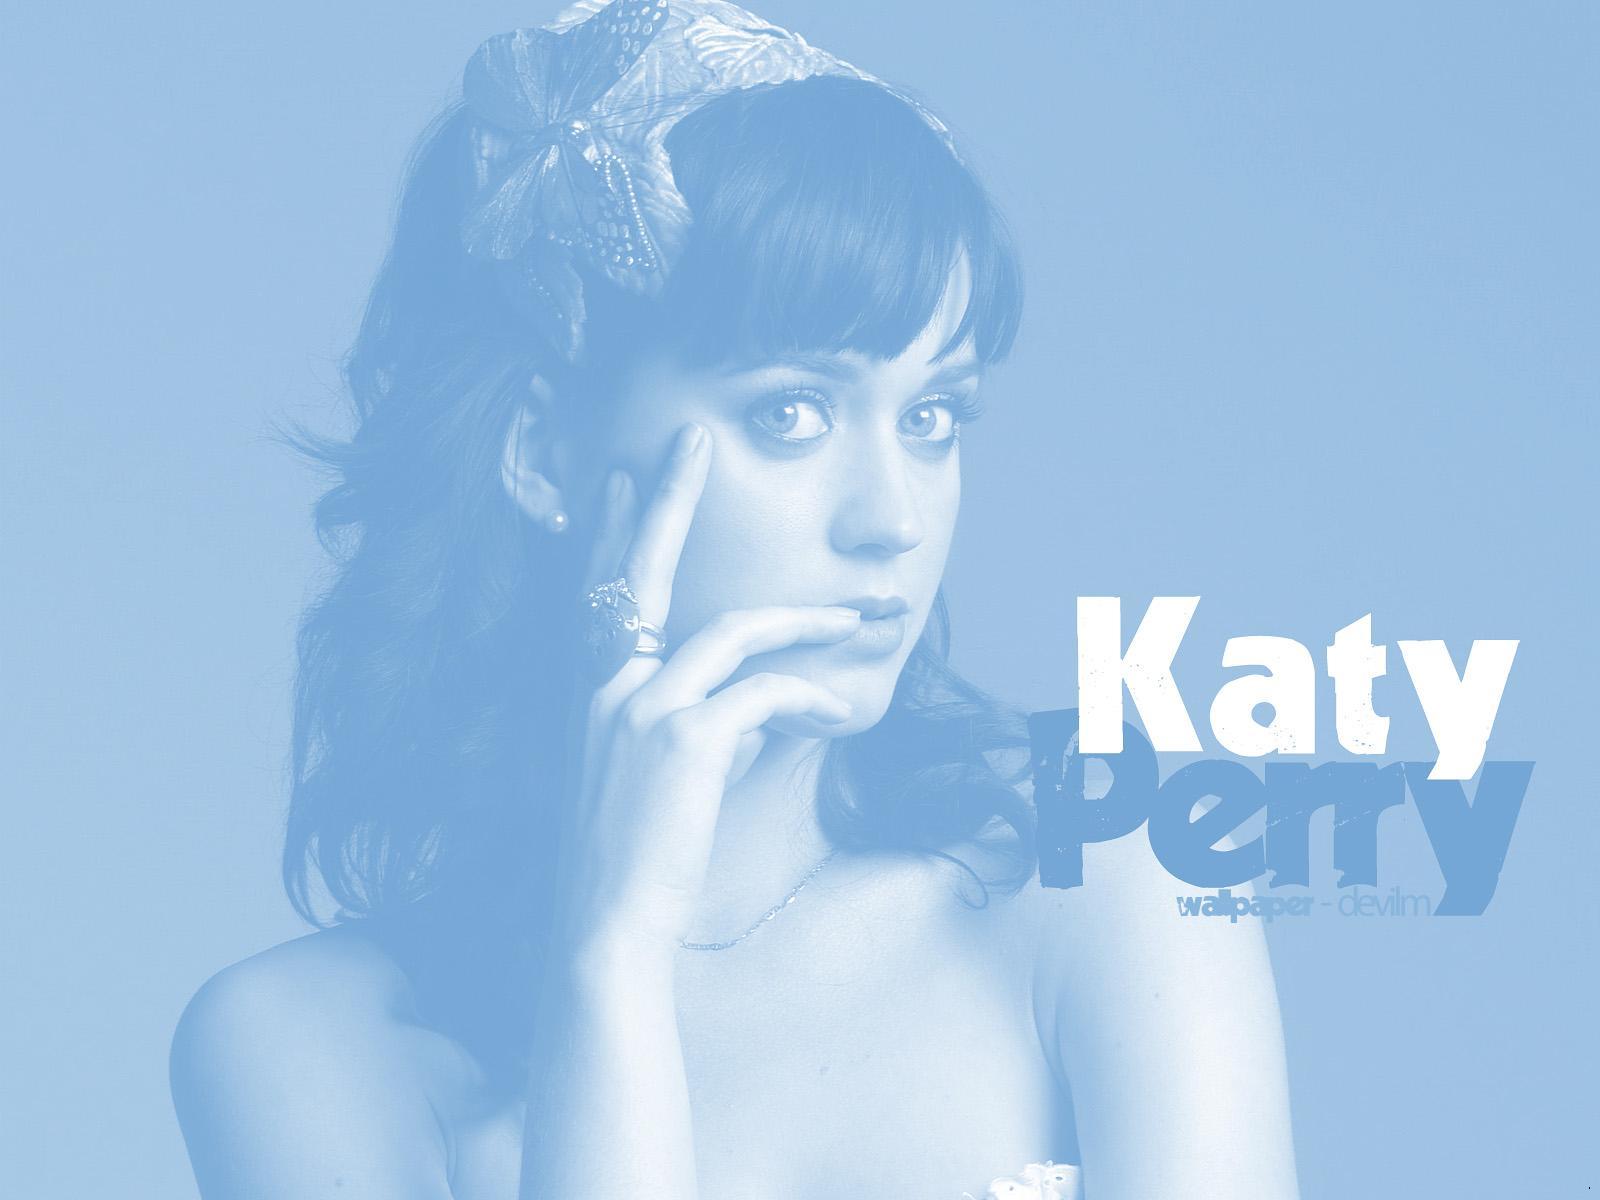 Колд кэти. Кэти Перри Cold Кэти. Katy Perry обложка hot. Кэти Перри Cold Кэти hot. Katy Perry hot n Cold обложка обложка.